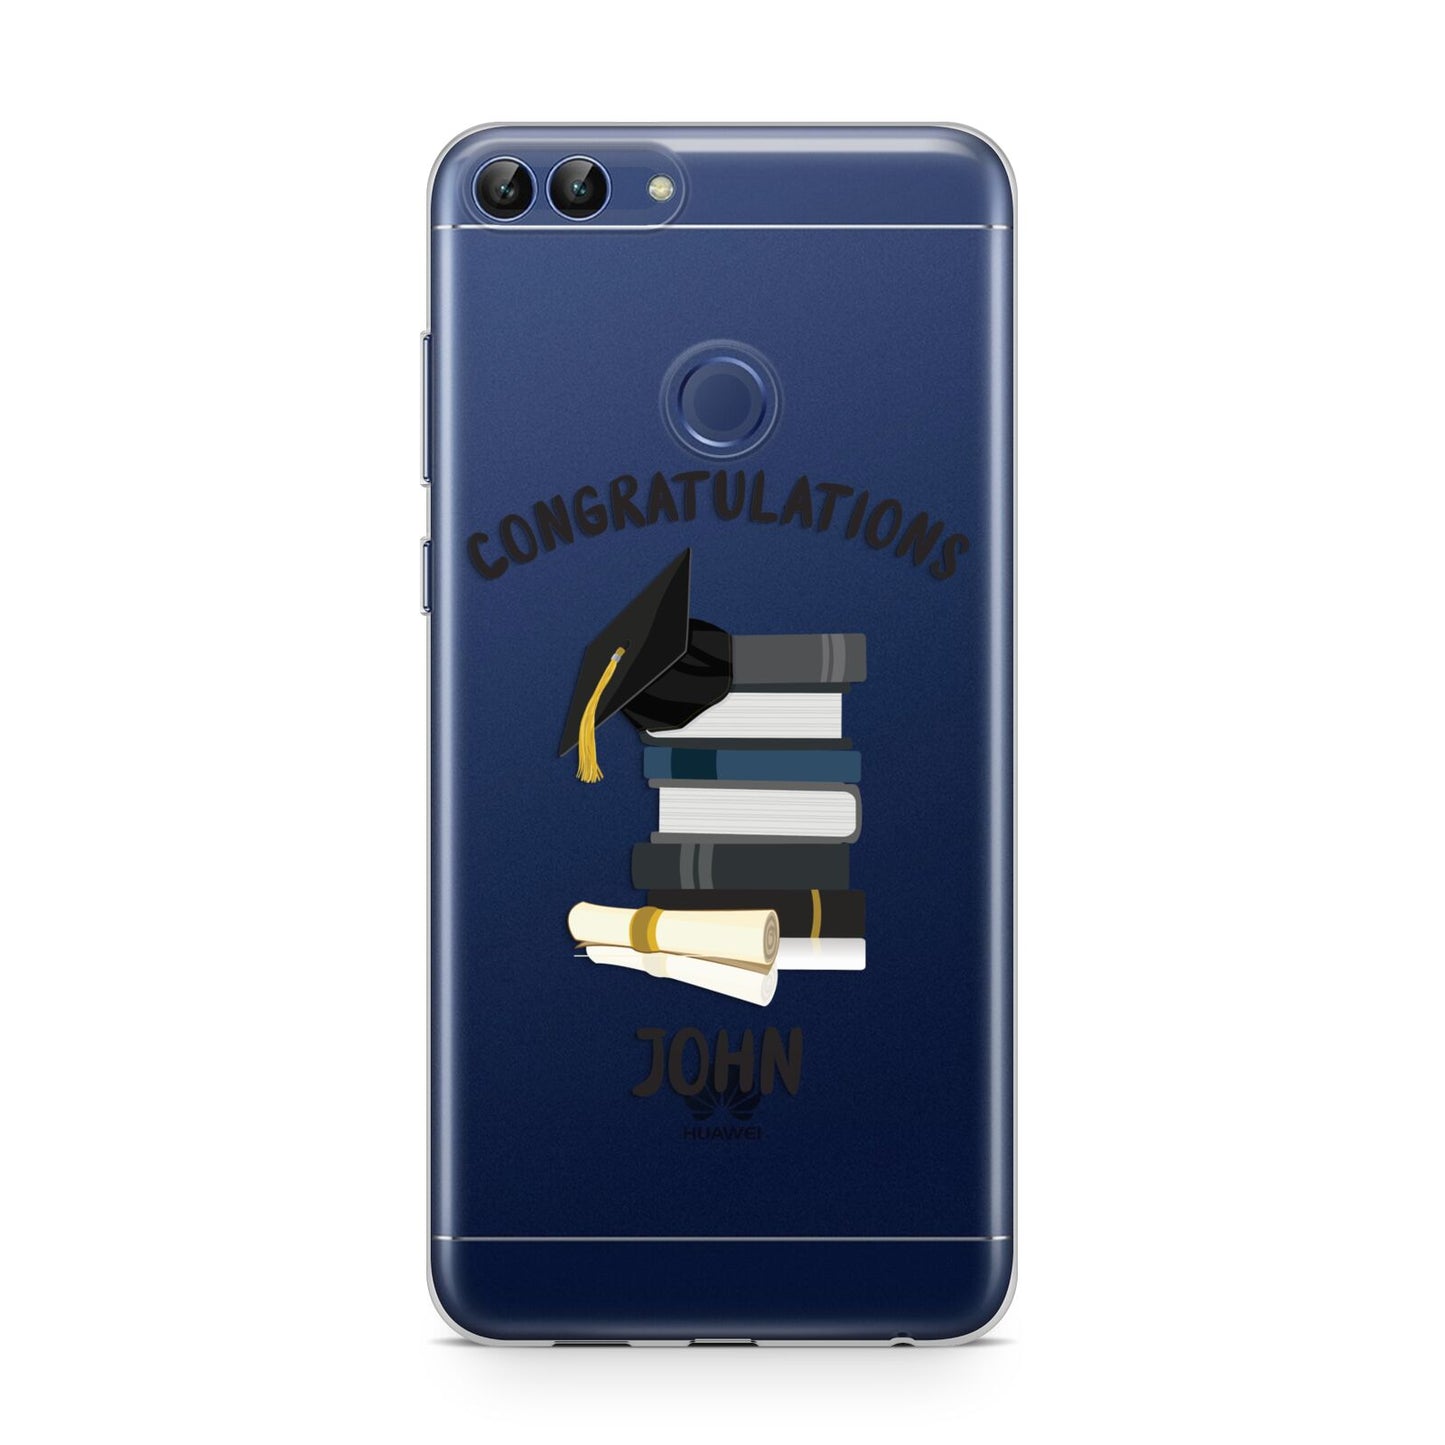 Congratulations Graduate Huawei P Smart Case